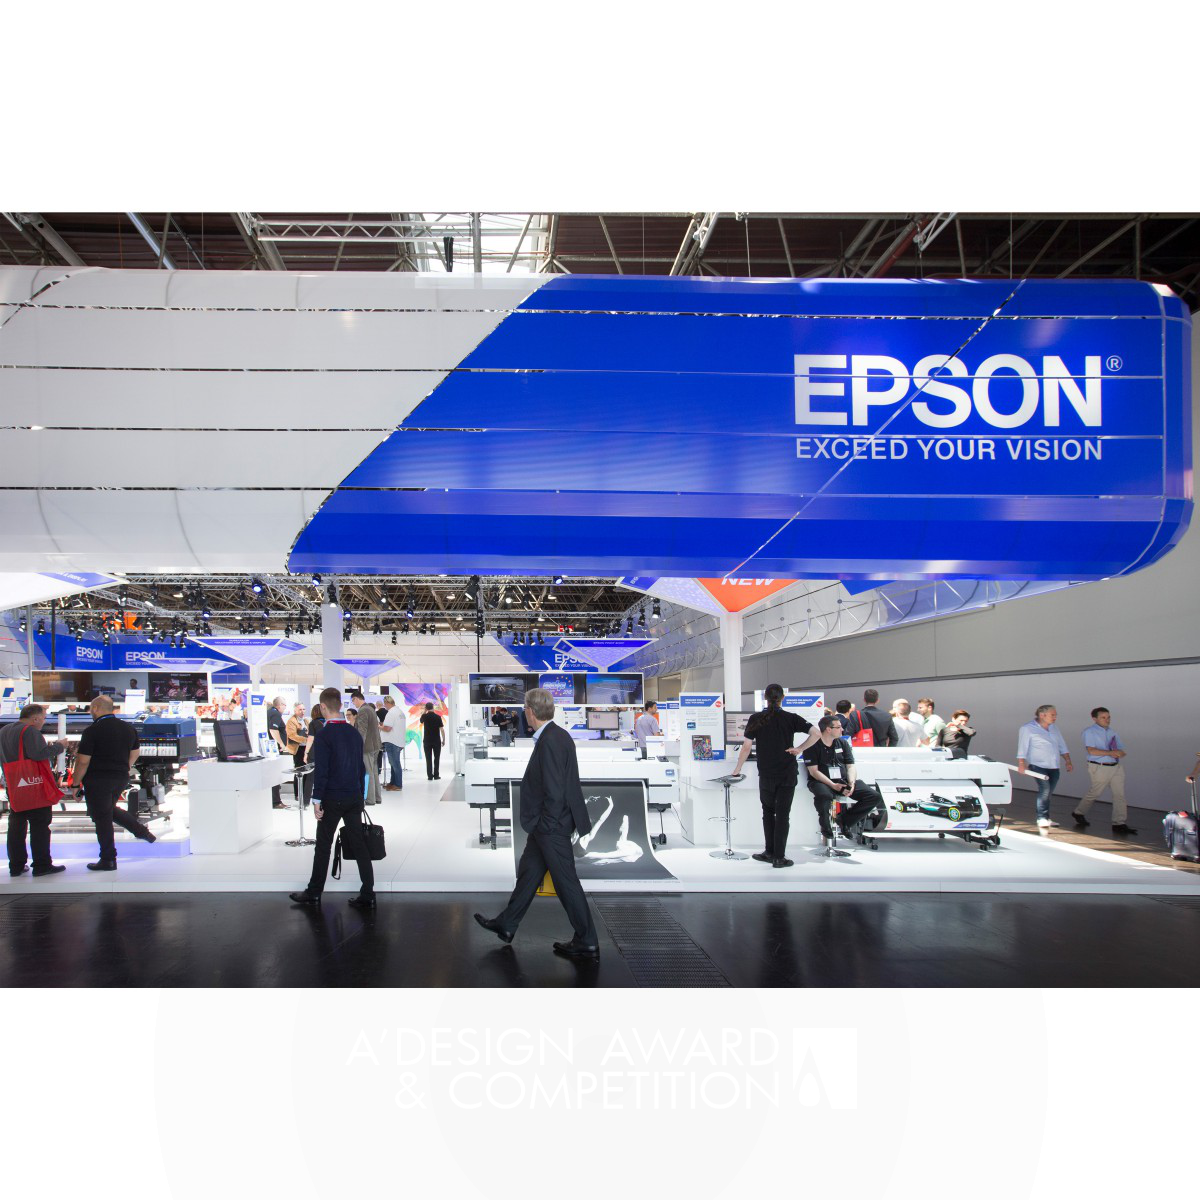 EPSON Drupa2016 <b>Exhibition stand